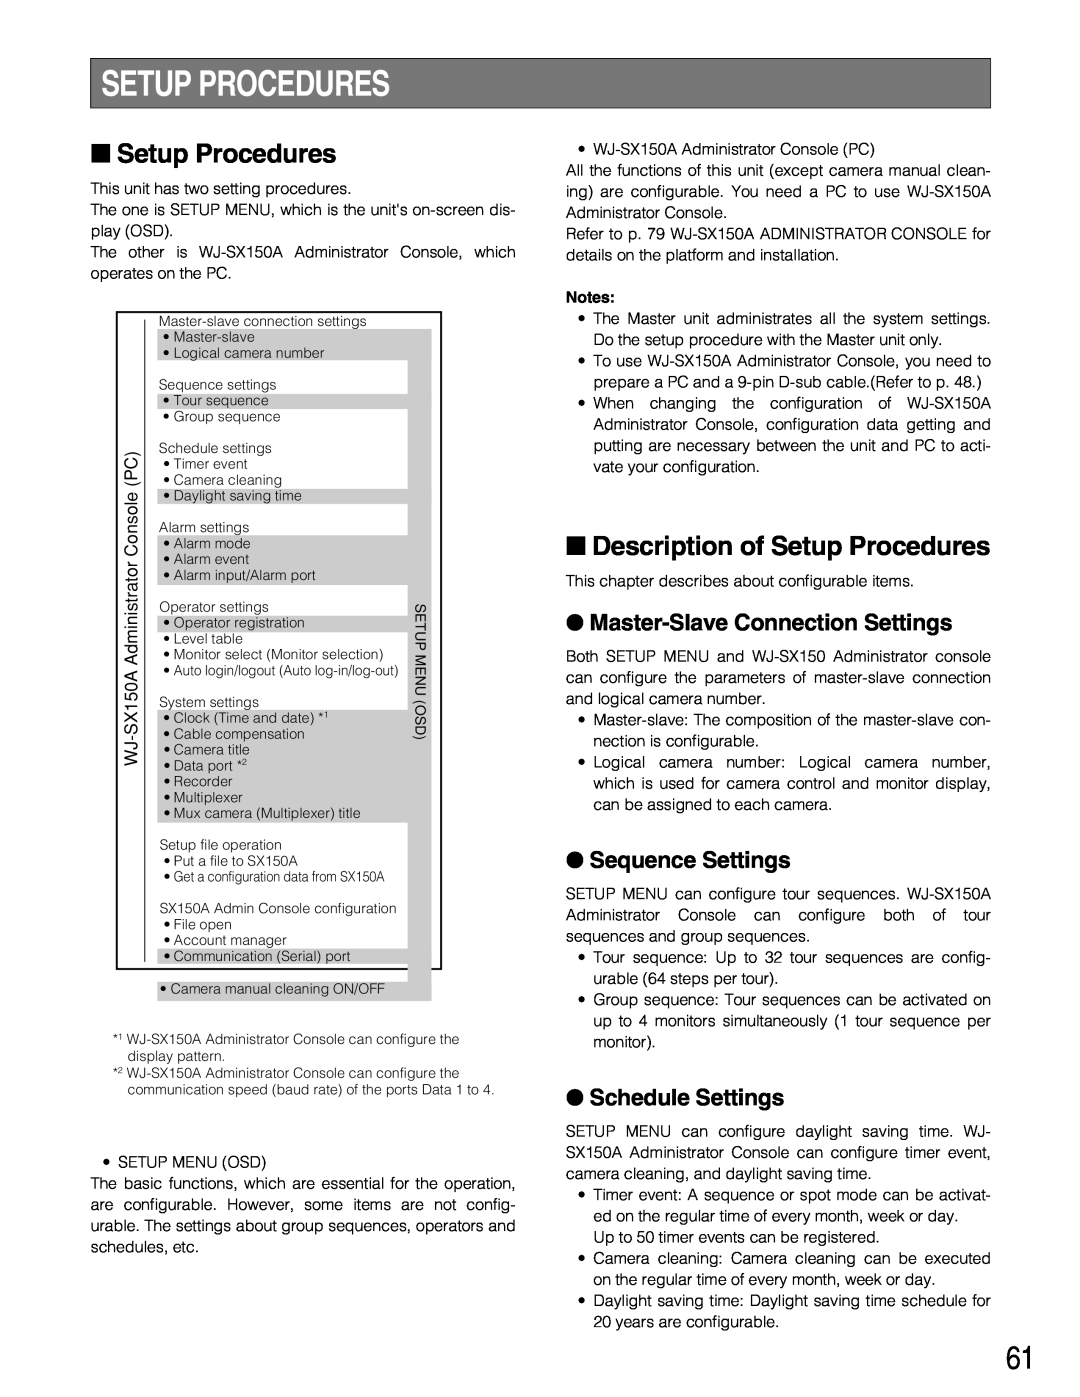 Panasonic WJ-SX150A manual Description of Setup Procedures, Master-Slave Connection Settings, Sequence Settings 